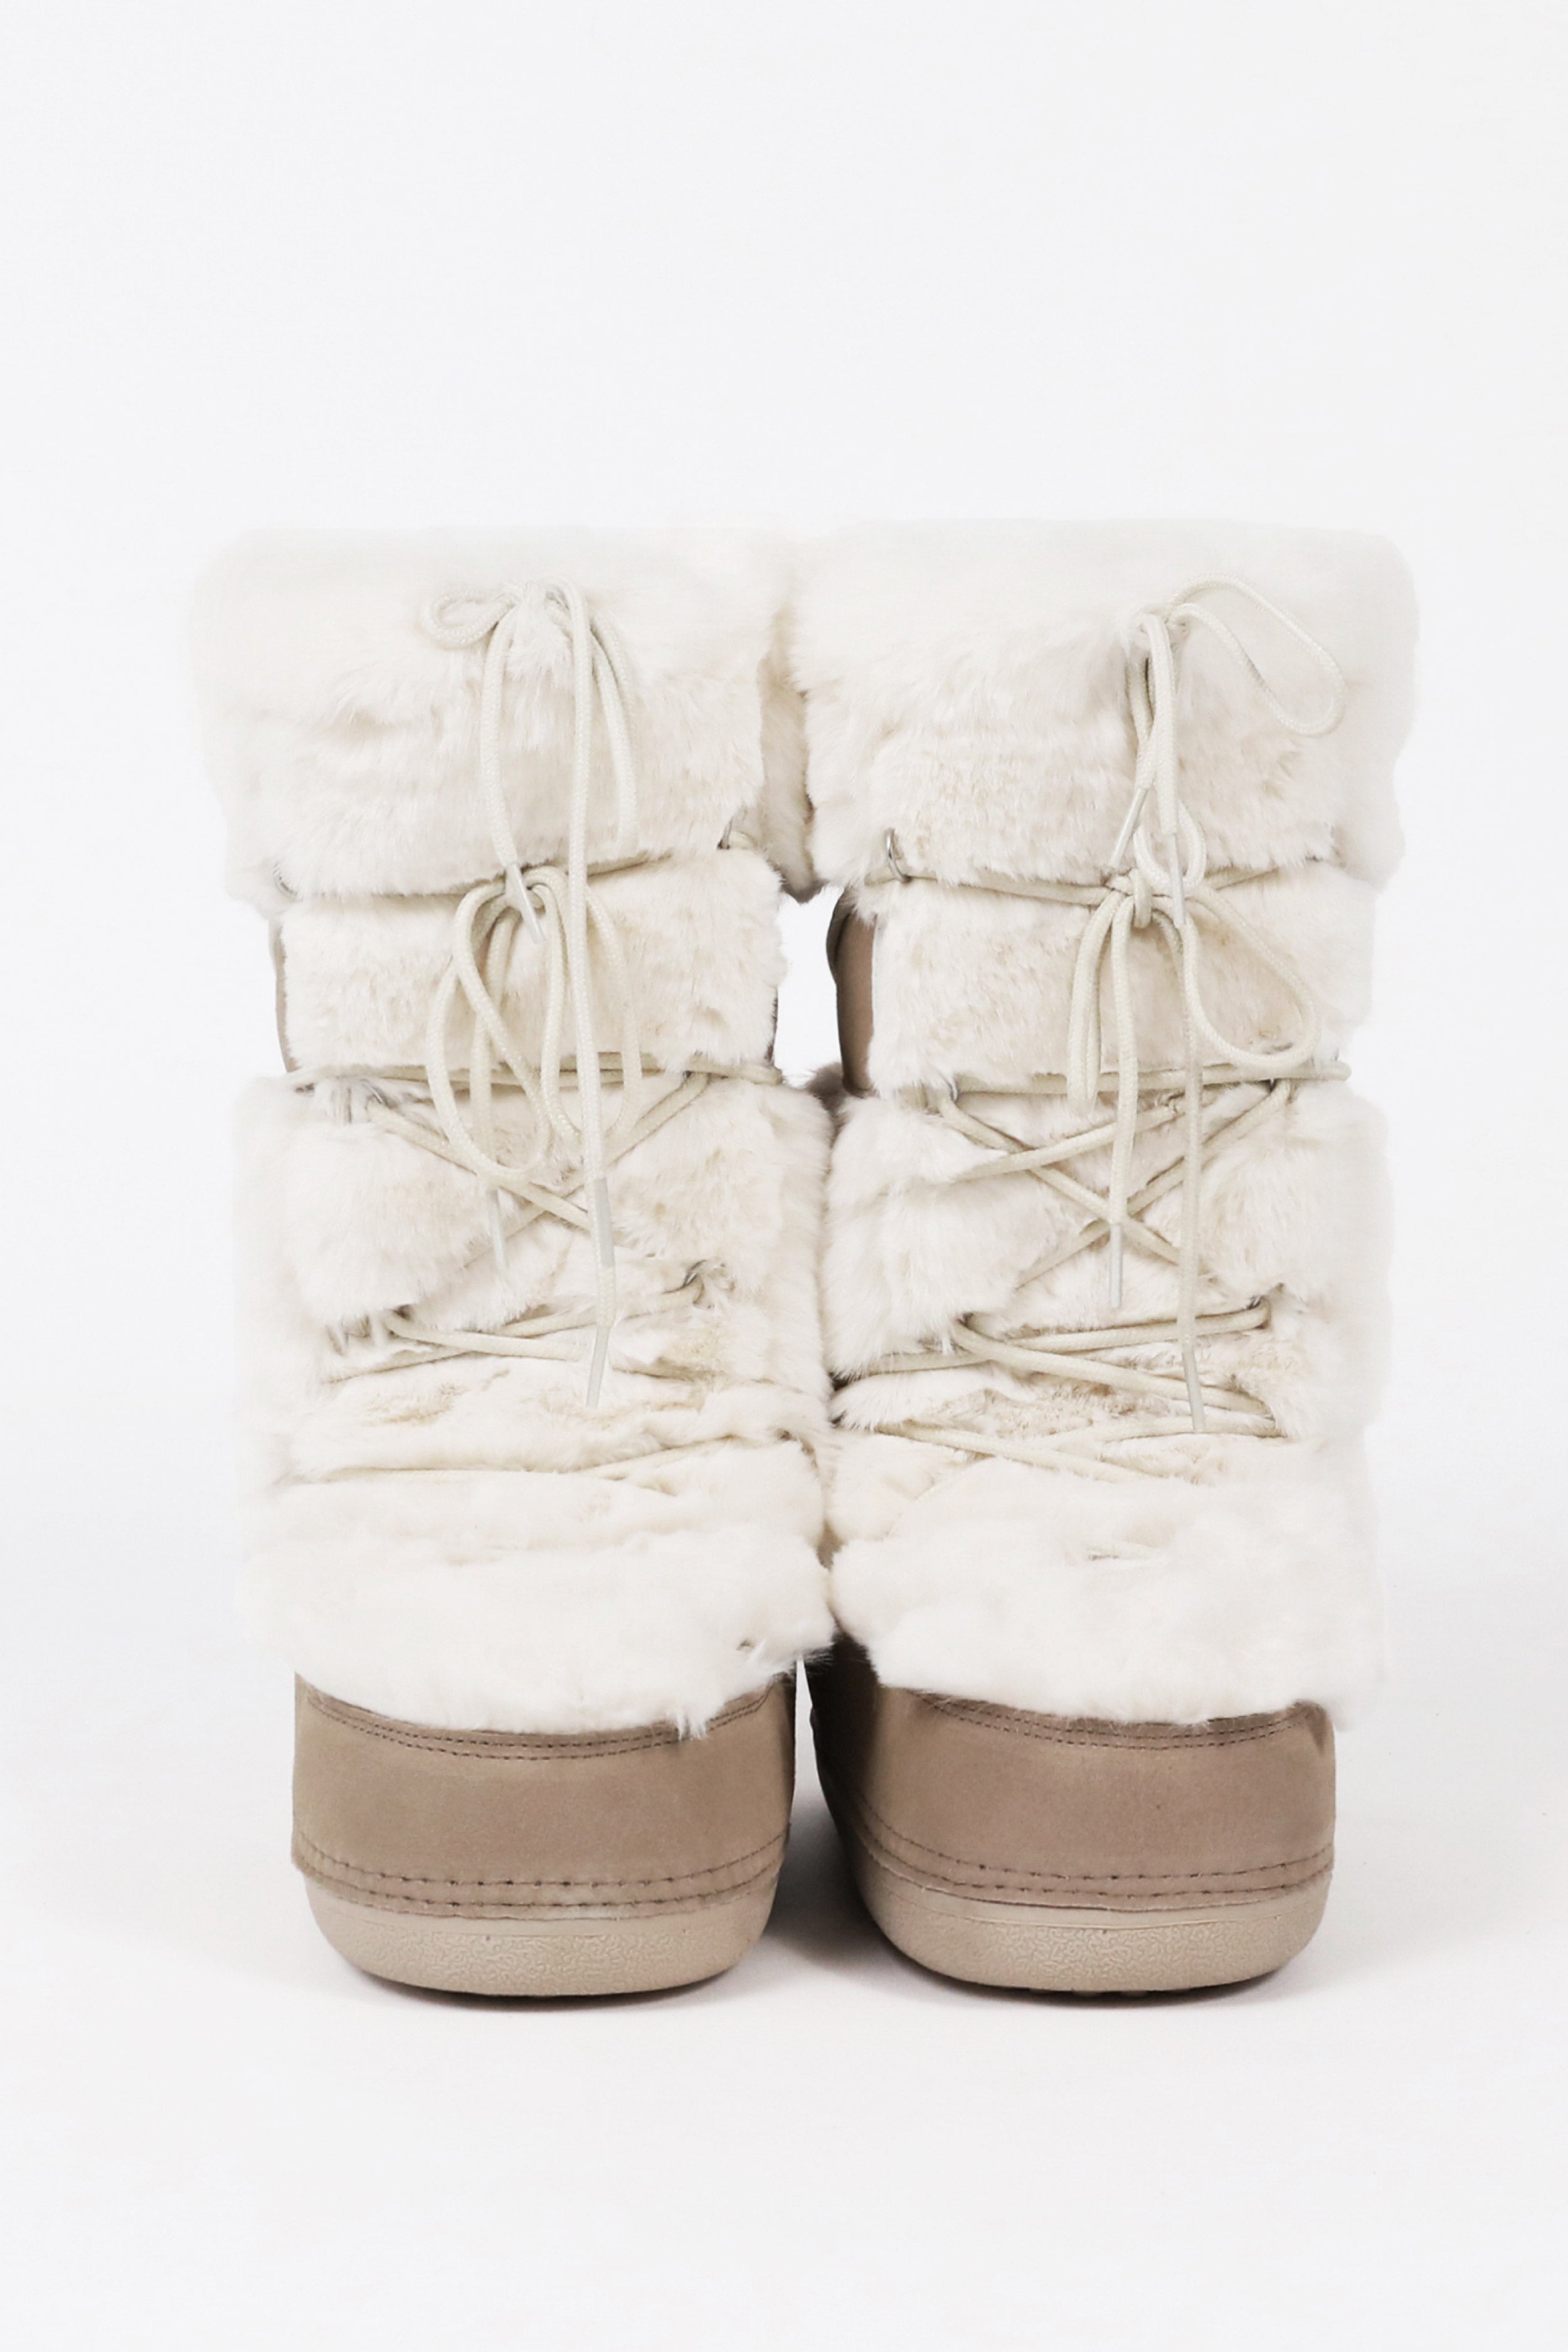 Badblood Eskimo Boots Tall Cream